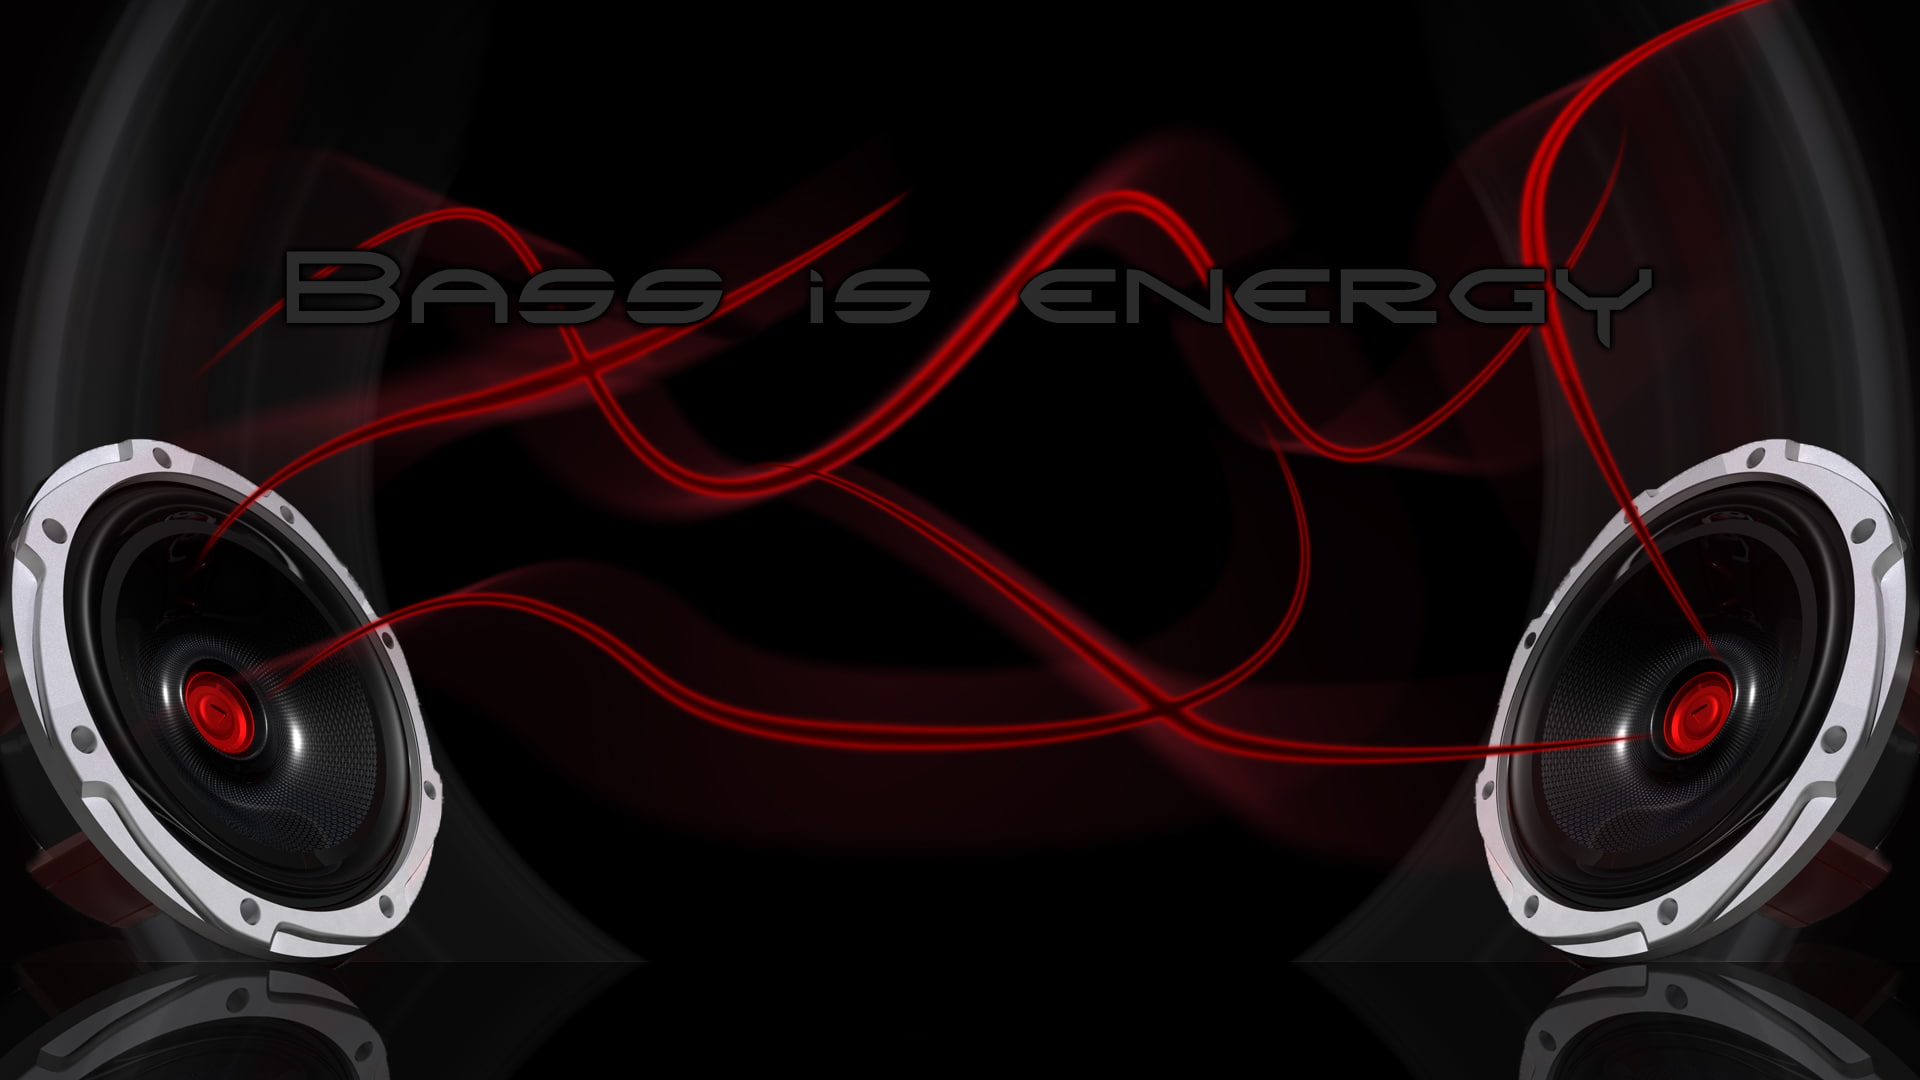 Bass Energy Speakers HD, music